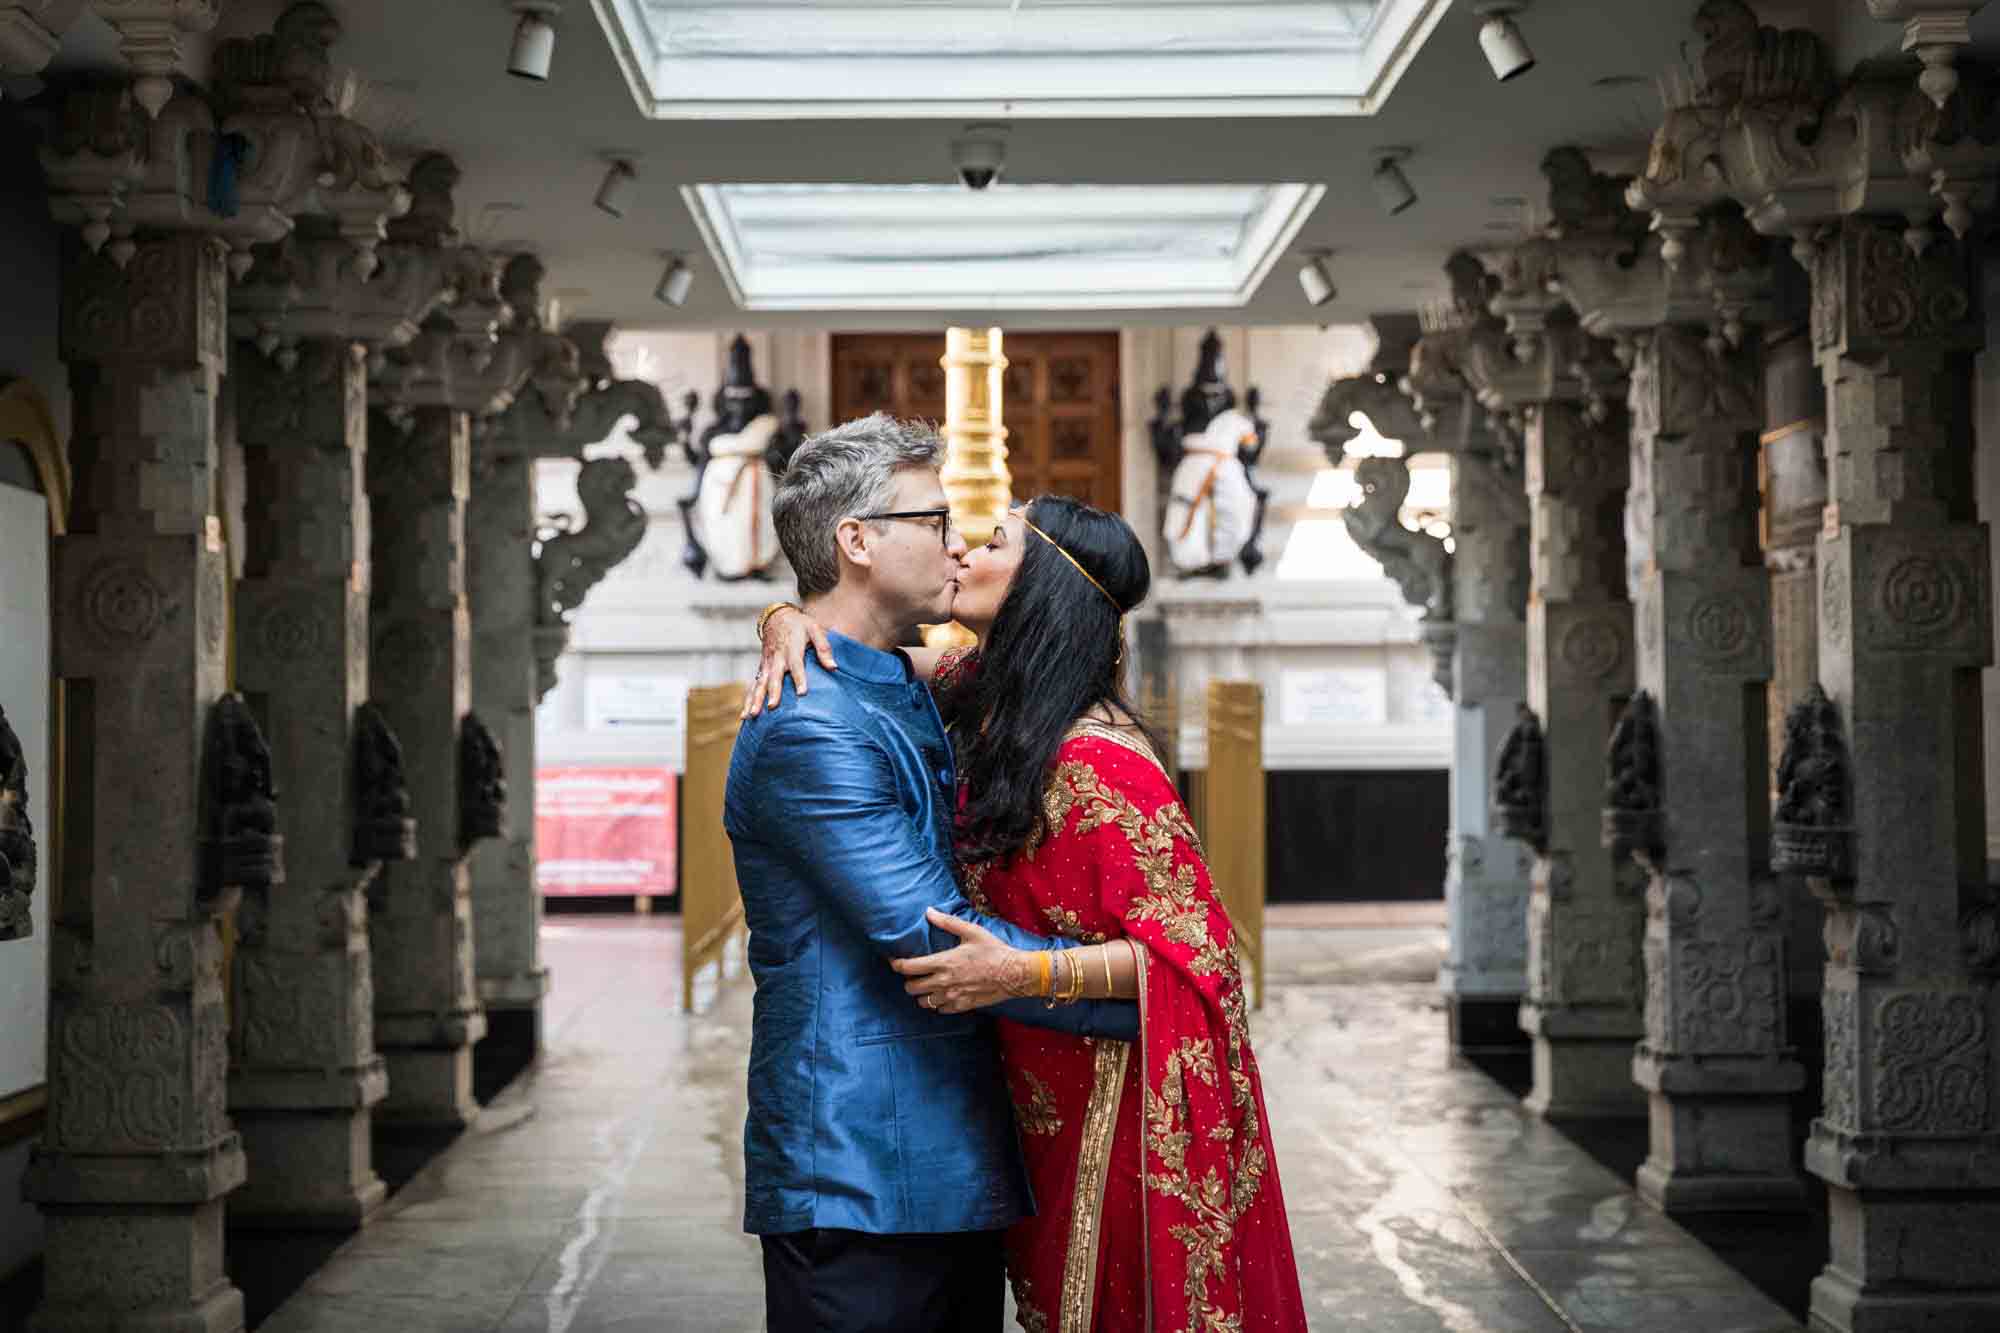 Ganesha Temple wedding photos of bride and groom kissing in main walkway